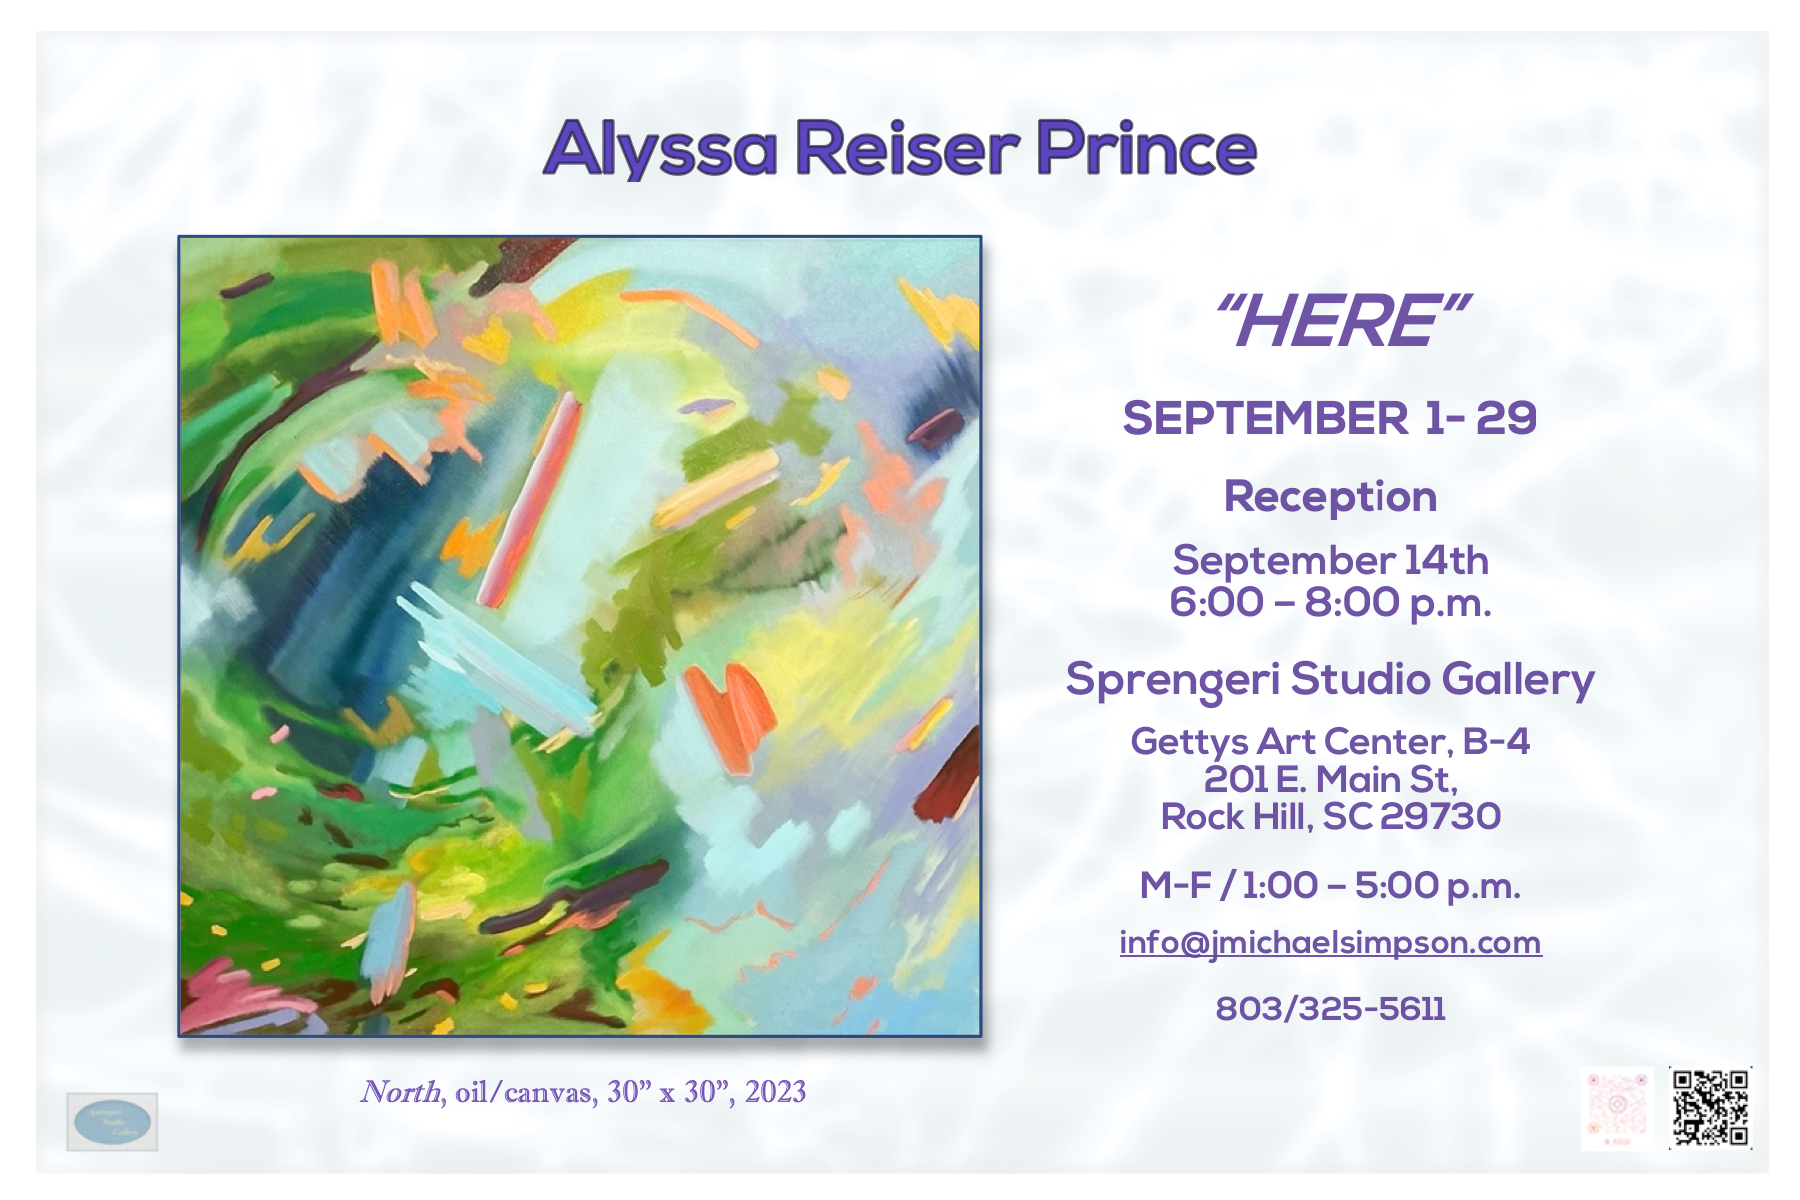 Alyssa Reiser Prince. HERE. SEPTEMBER 1-29. Reception September 14th 6:00-8:00 p.m. Sprengeri Studio Gallery. Gettys Art Center, B-4 201 E. Main St, Rock Hill, SC 29730. M-F/1:00-5:00p.m. info@jmichaelsimpson.com. 803/325-5611. Pictured: North, oil/canvas, 30" x 30", 2023.